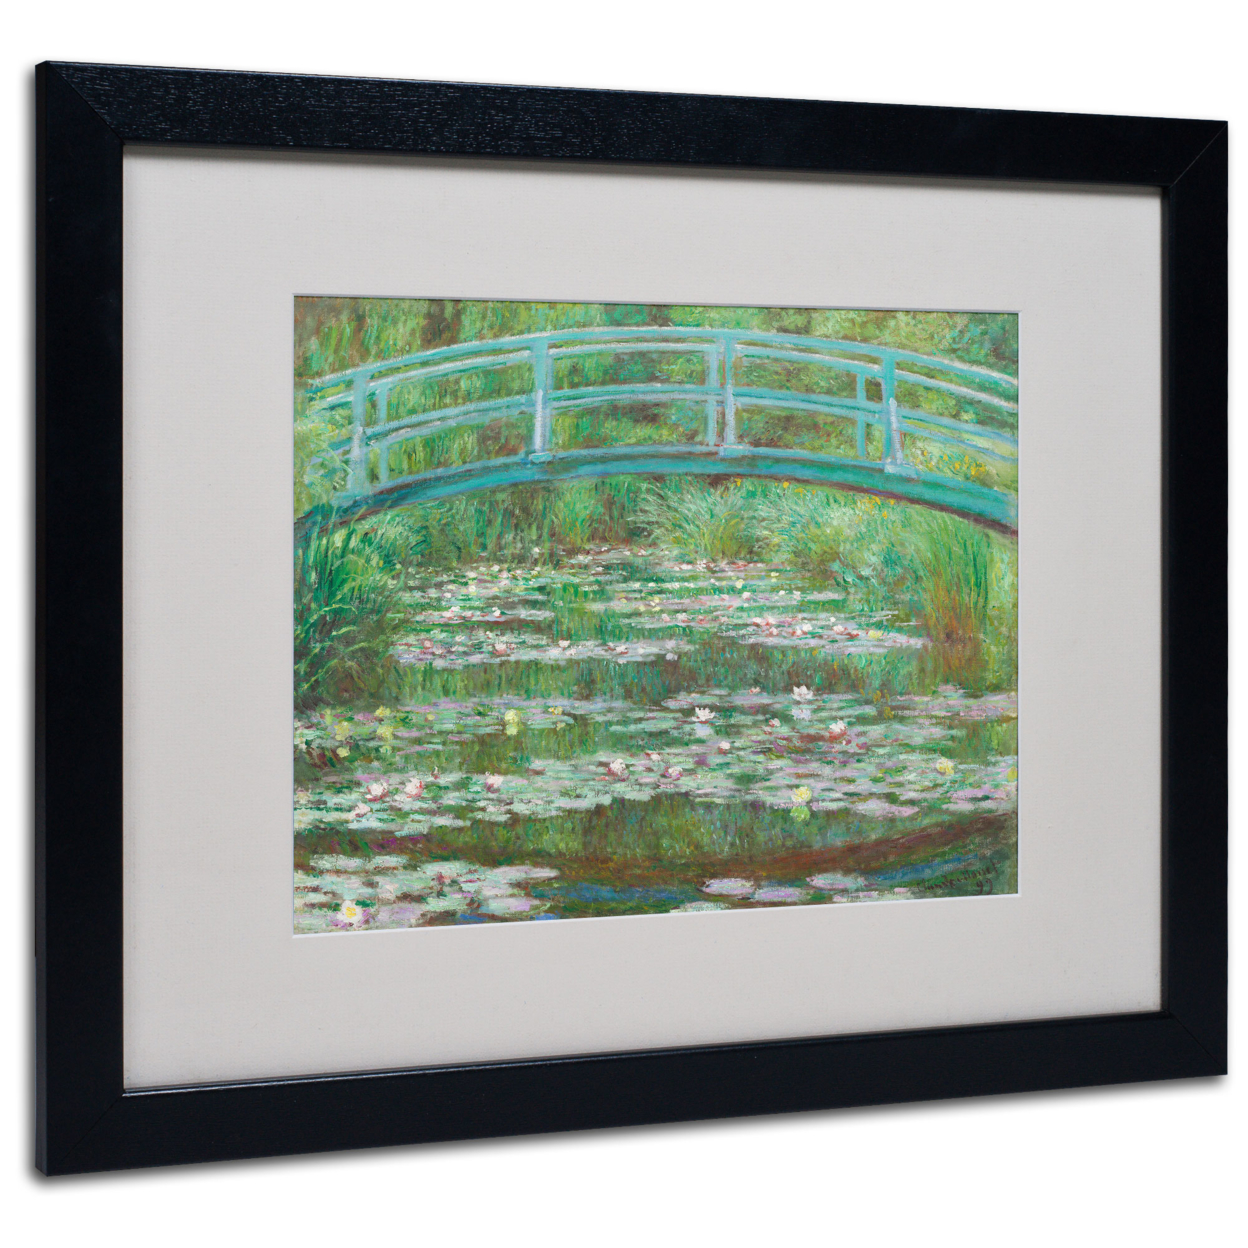 Claude Monet 'The Japanese Footbridge' Black Wooden Framed Art 18 X 22 Inches